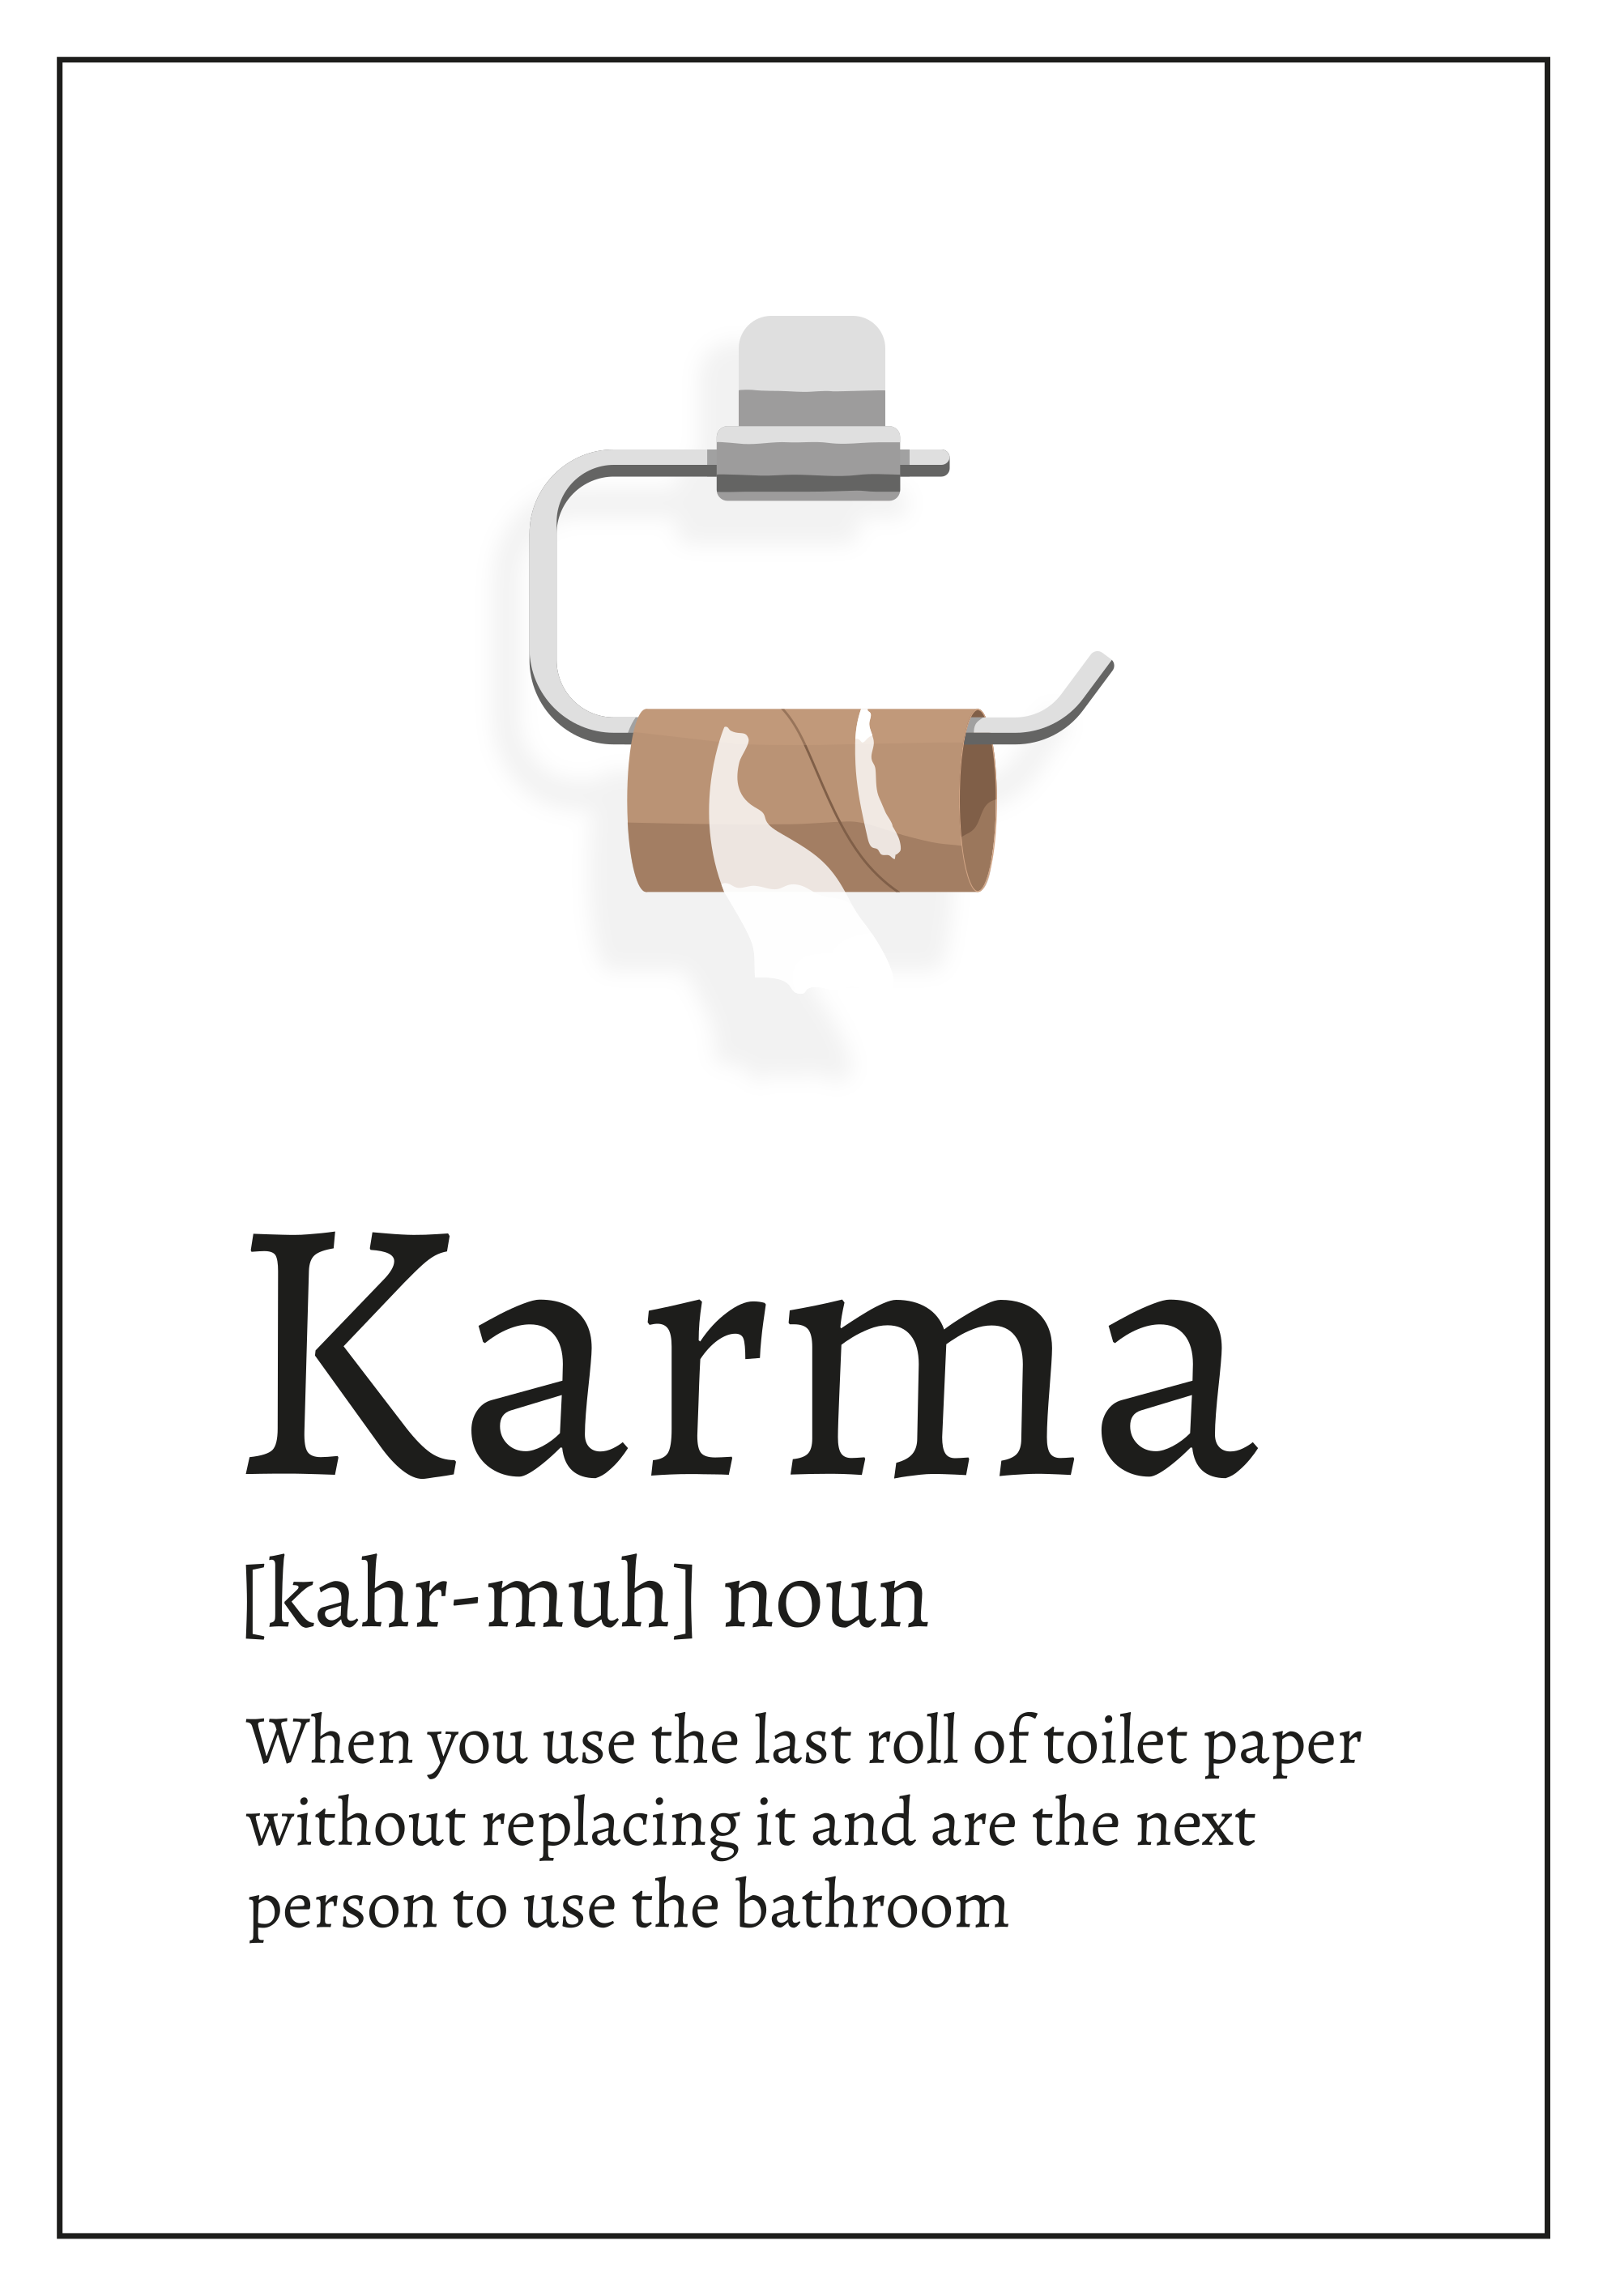 Karma definition plakat -